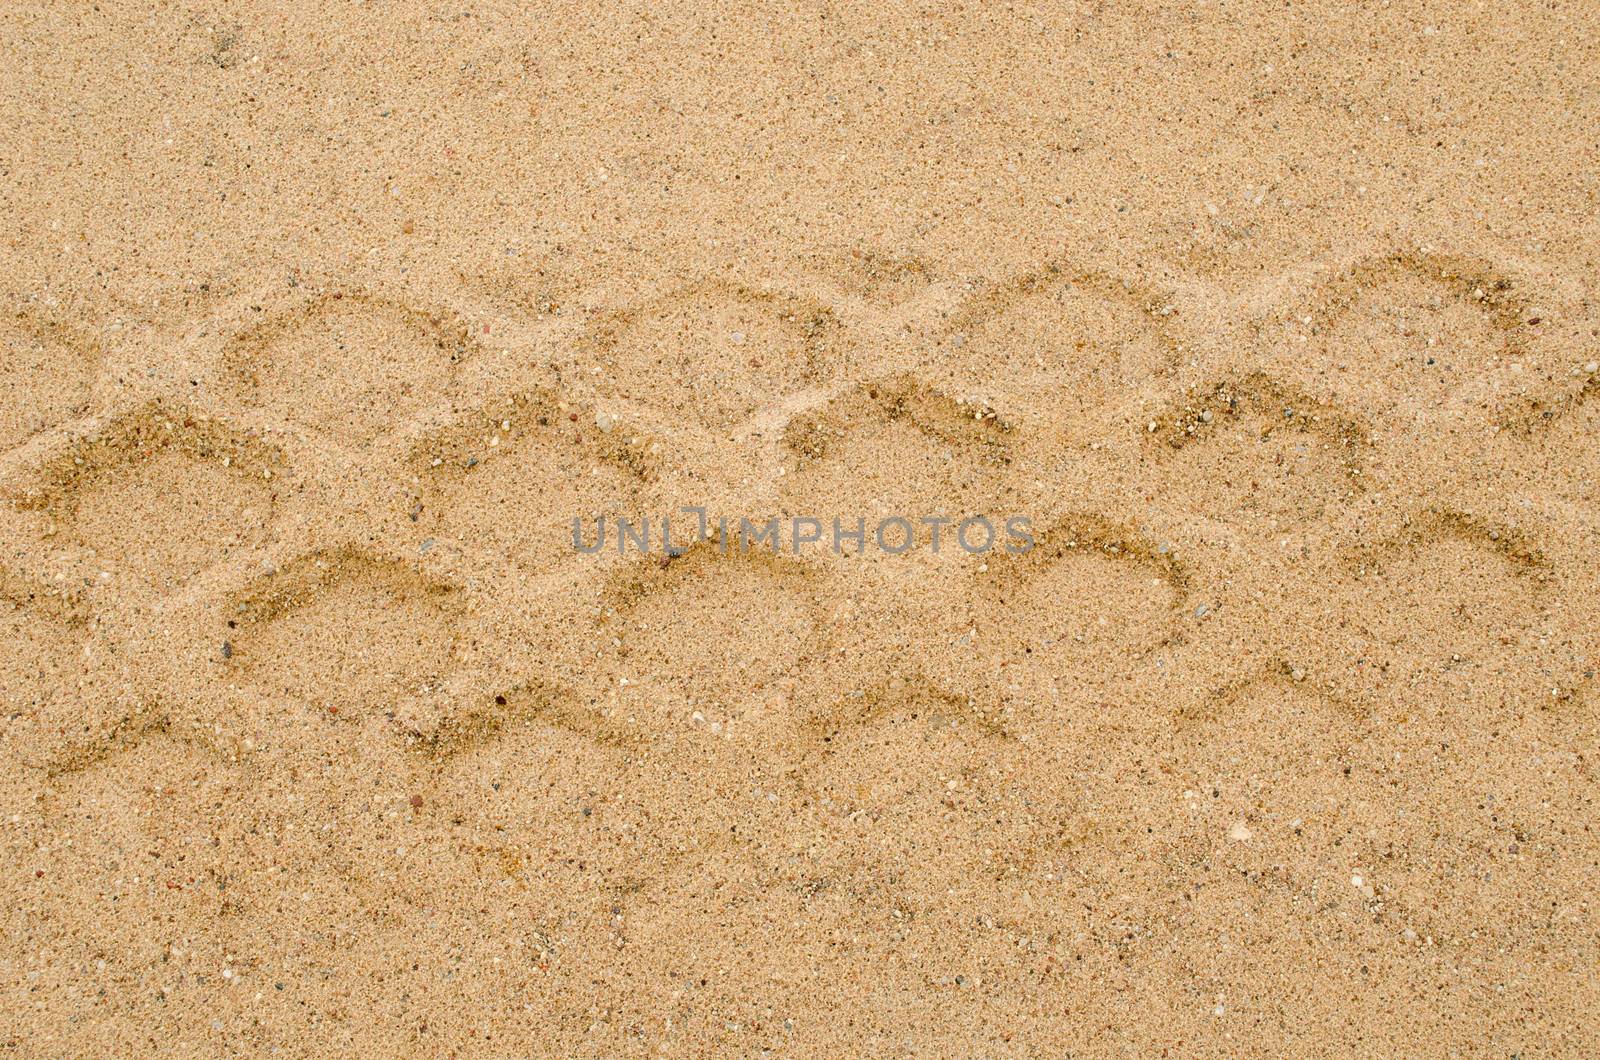 heavy machine track mark remain sand background by sauletas